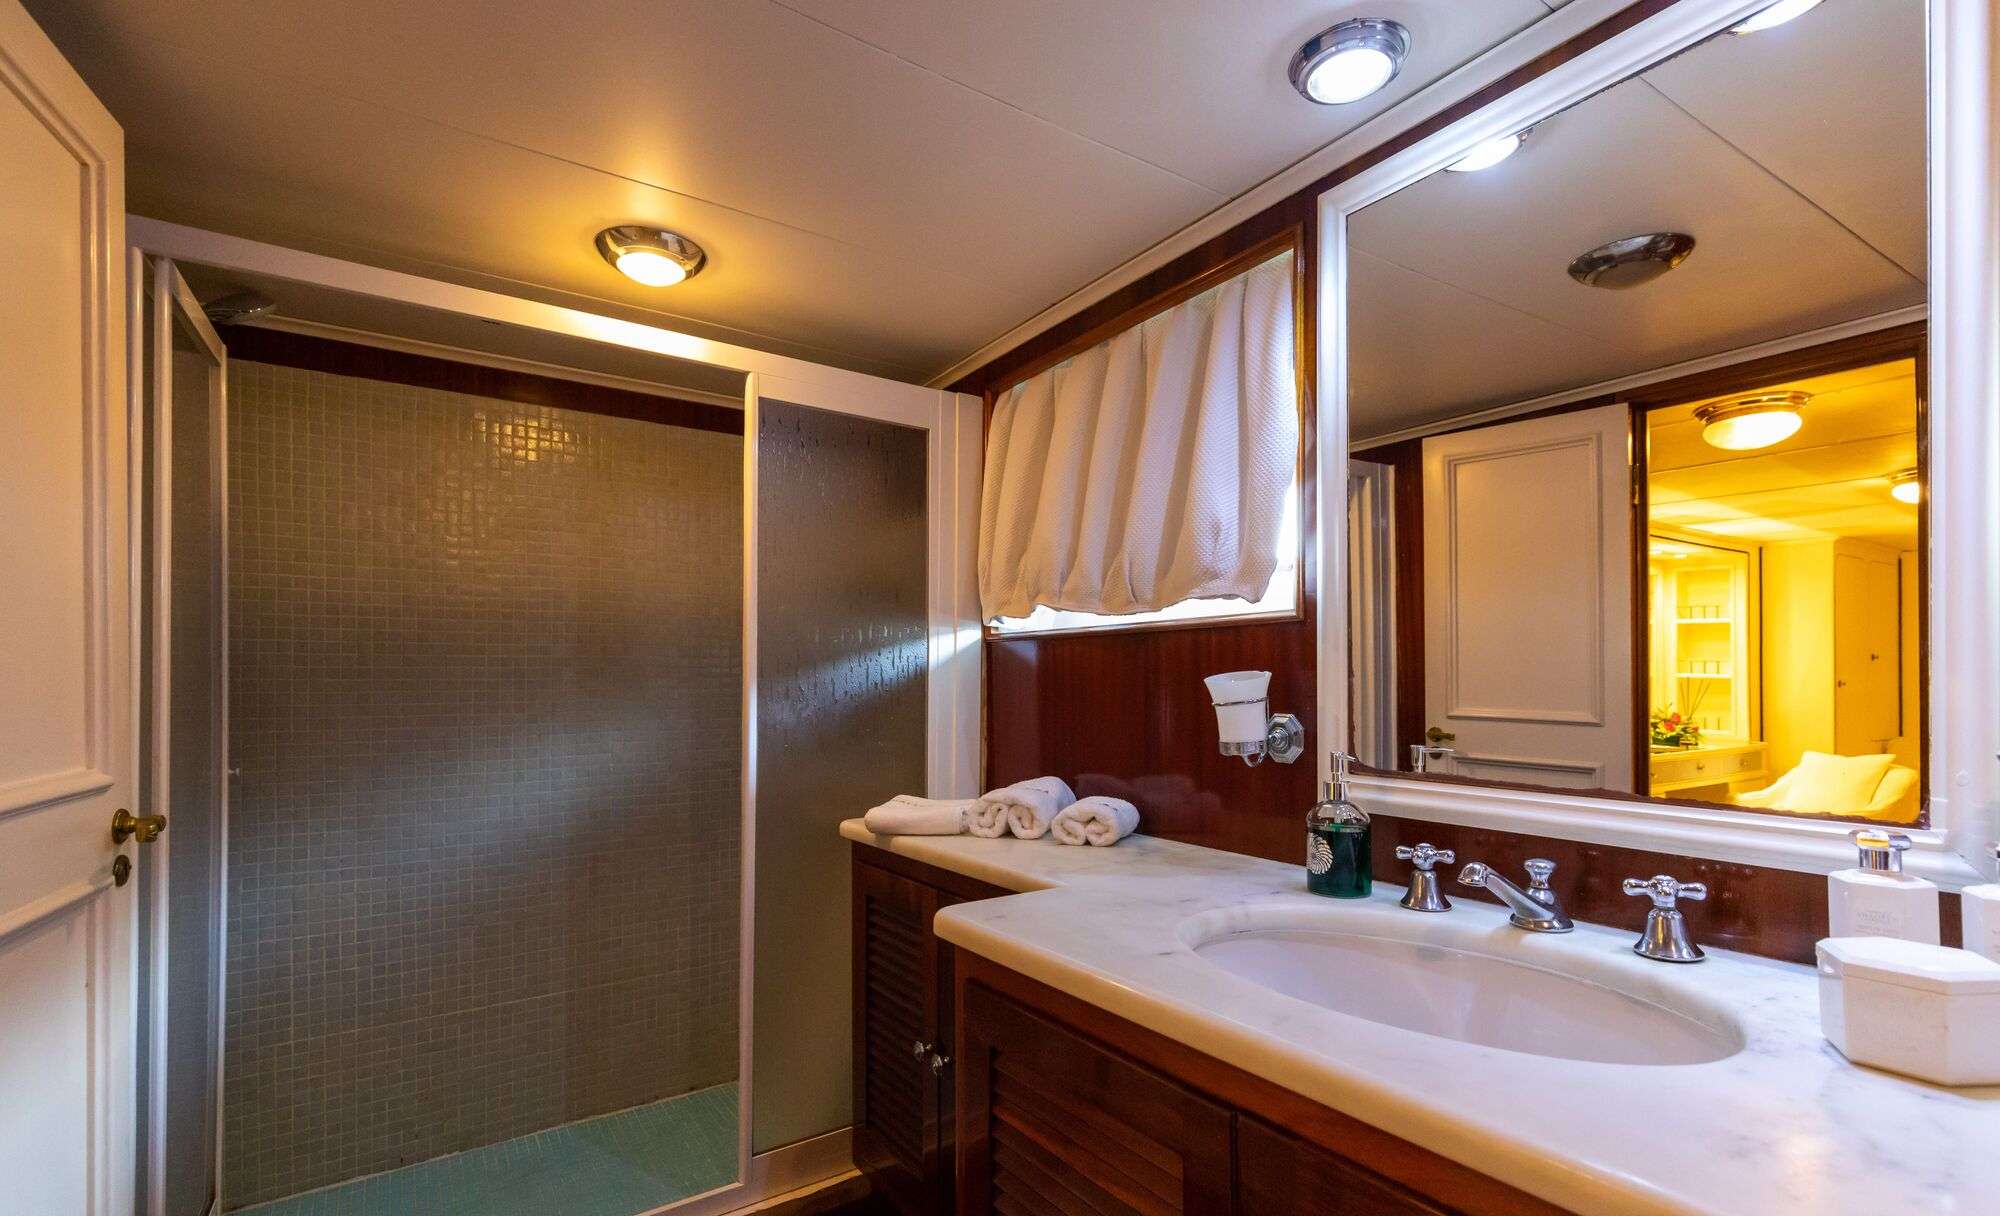 NAFISA Yacht Charter - Master Bathroom